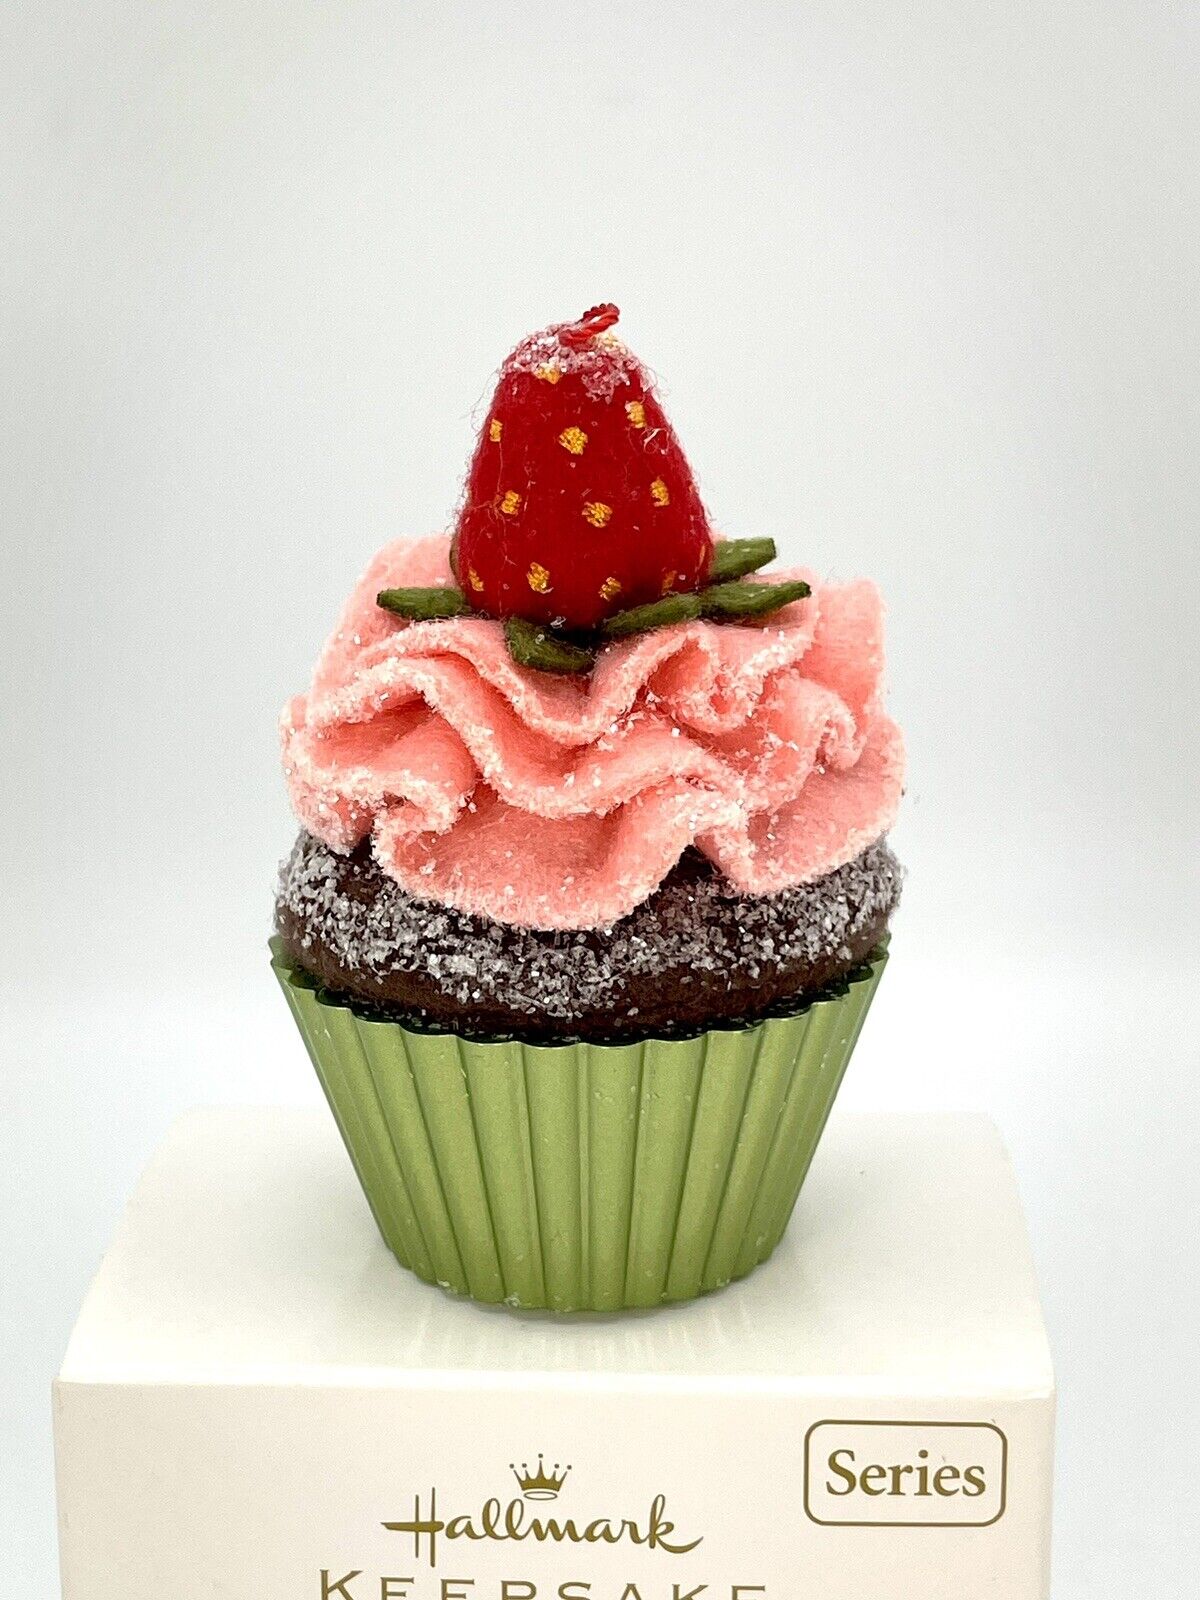 2012 Berry-licious Christmas Cupcakes #3 Hallmark Keepsake Ornament Strawberry